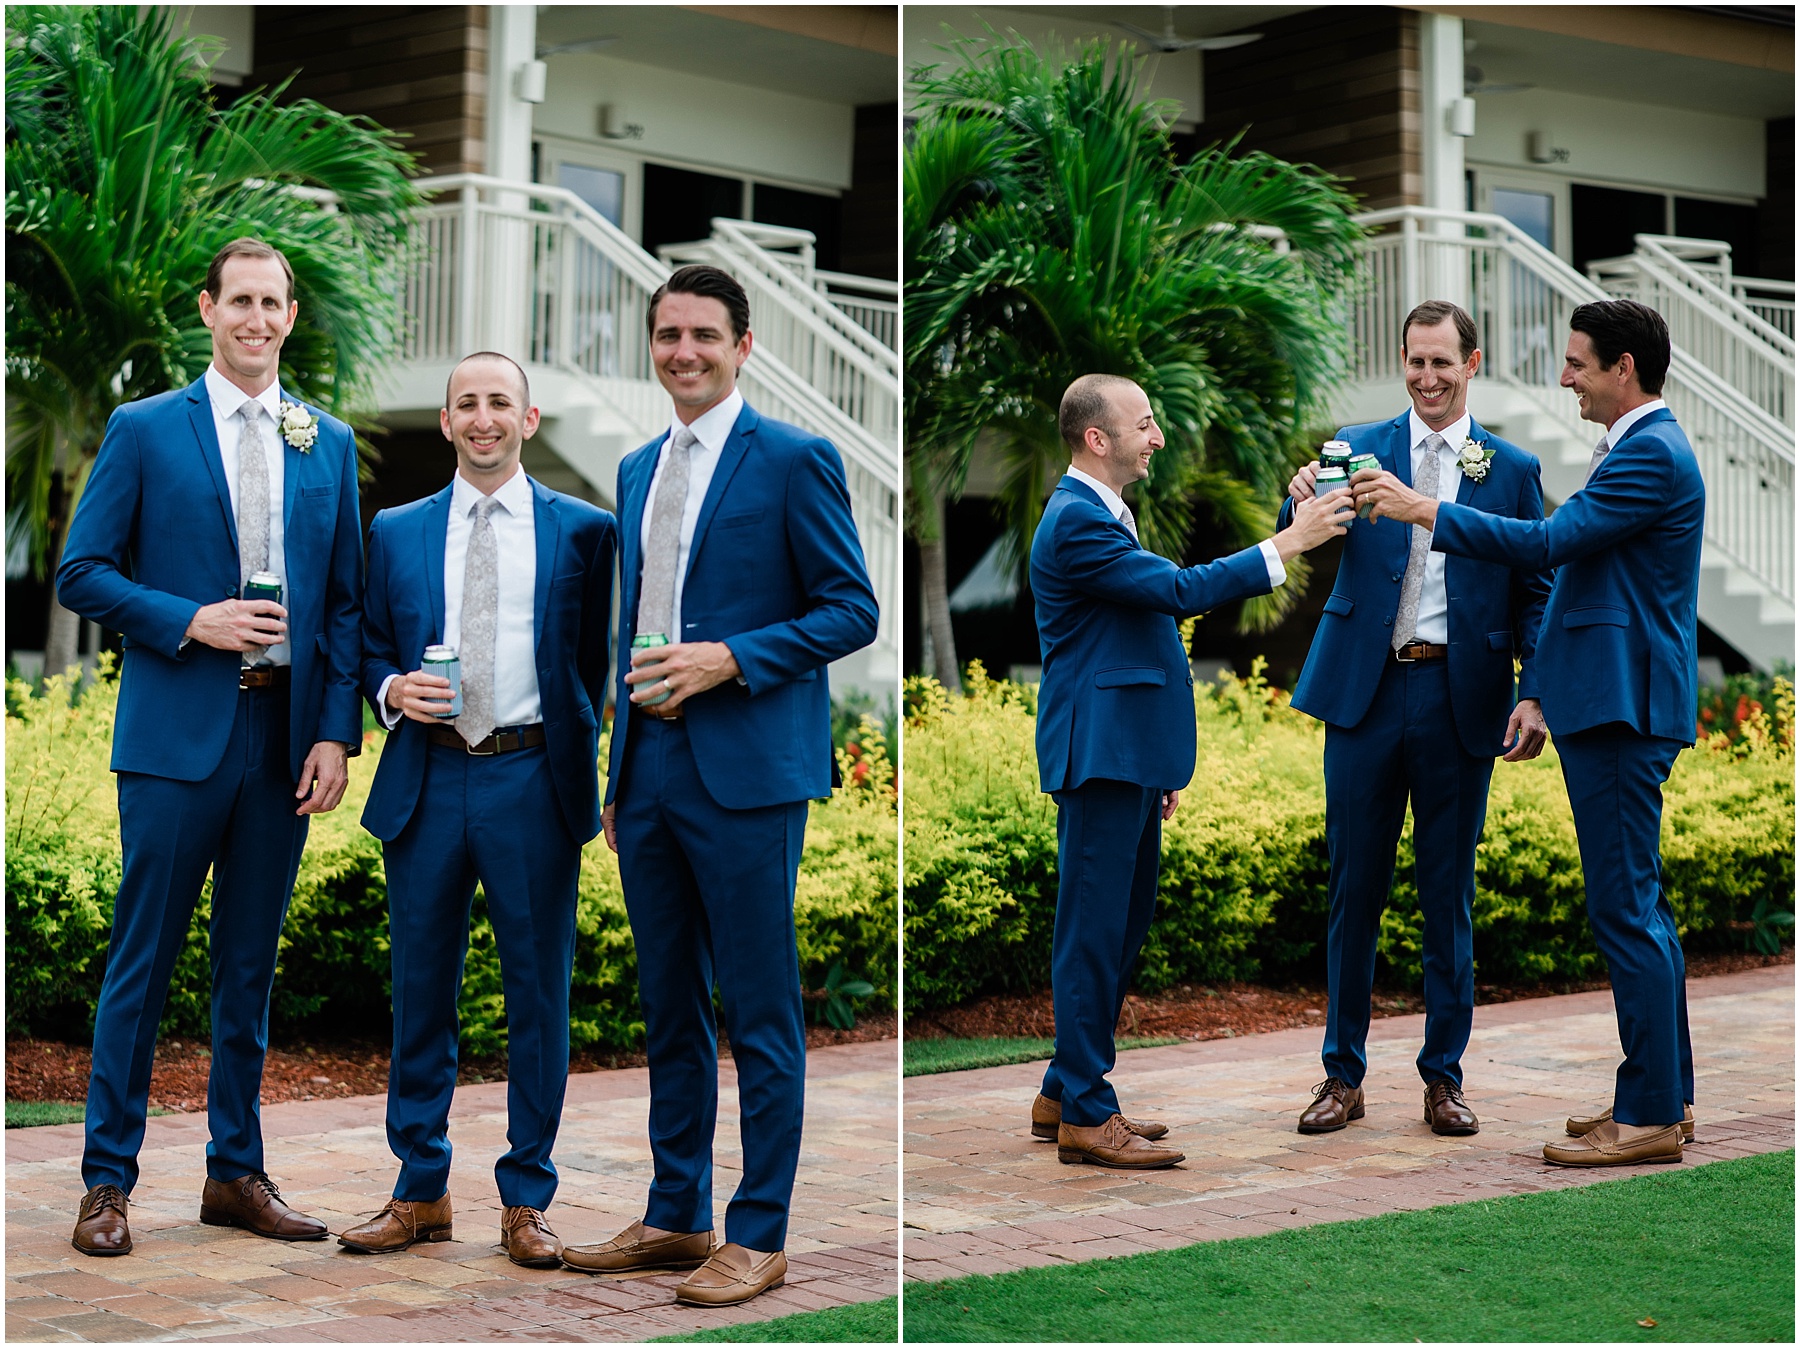 Groomsmen share a toast on wedding day at JW Marriott Marco Island in Florida.